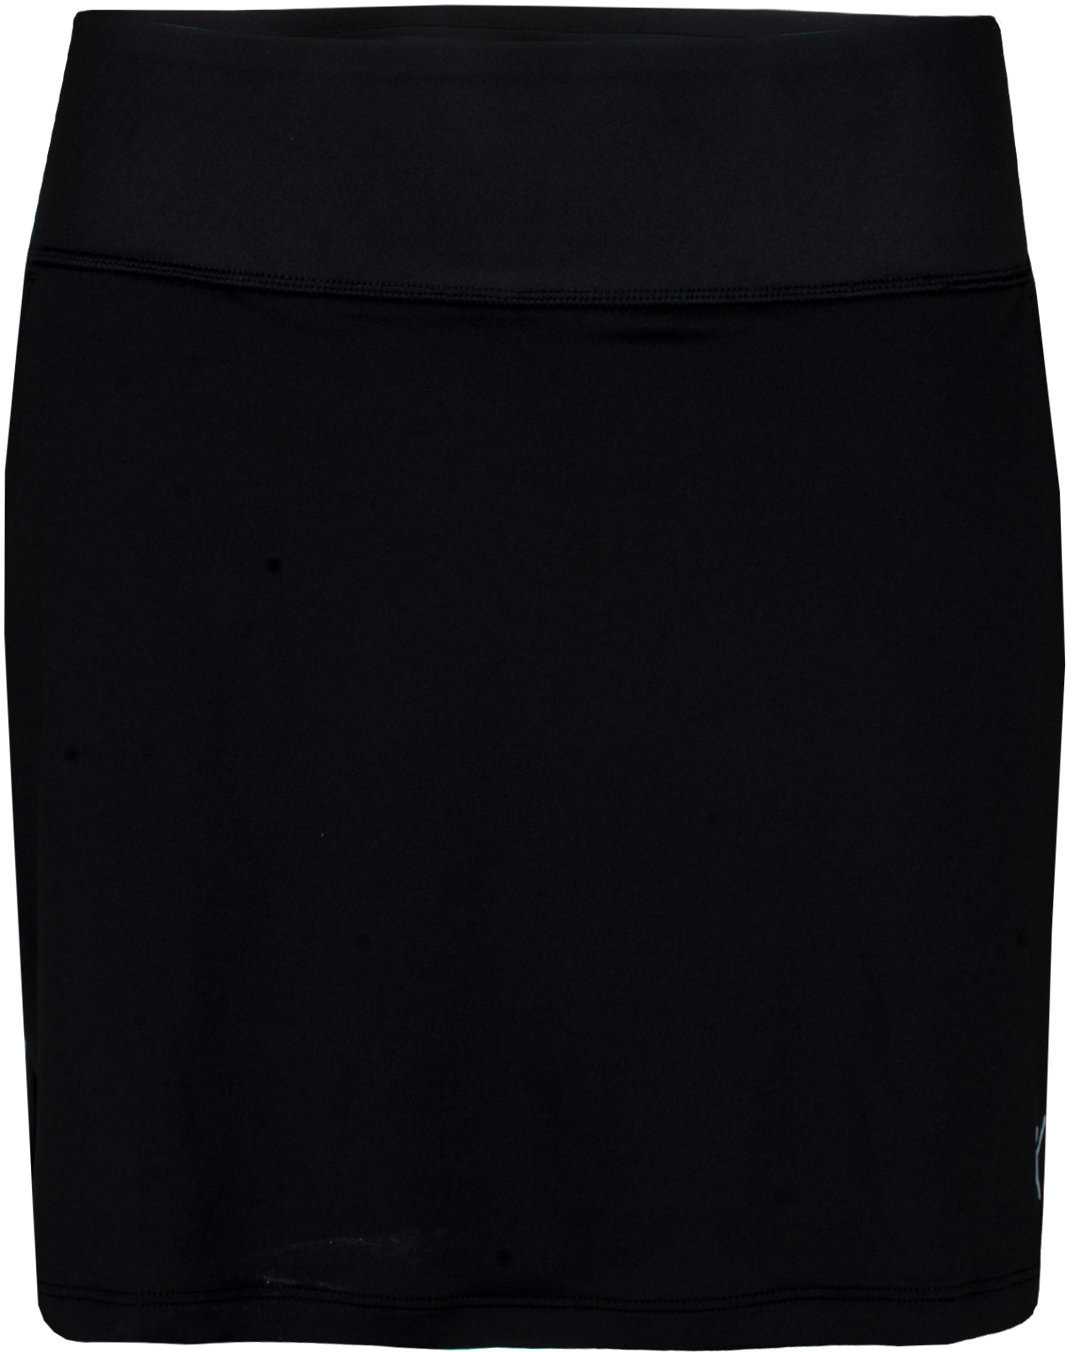 Skirt / Dress Puma PWRSHAPE Solid Knit Womens Skirt Black XXS